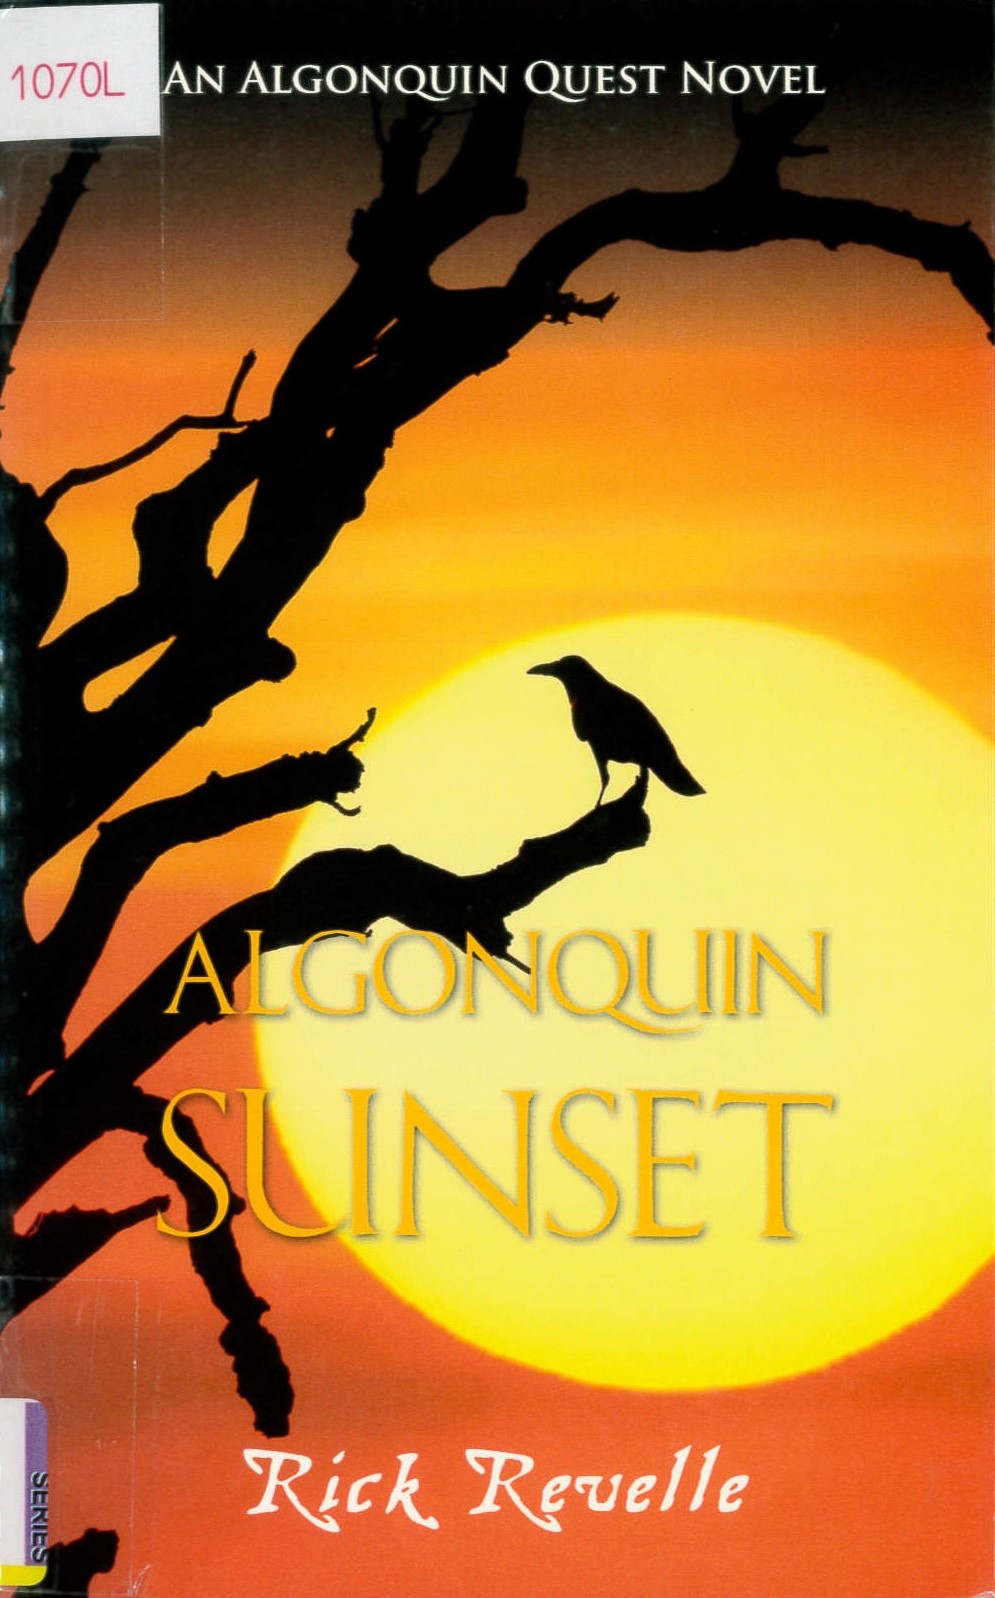 Algonquin sunset /